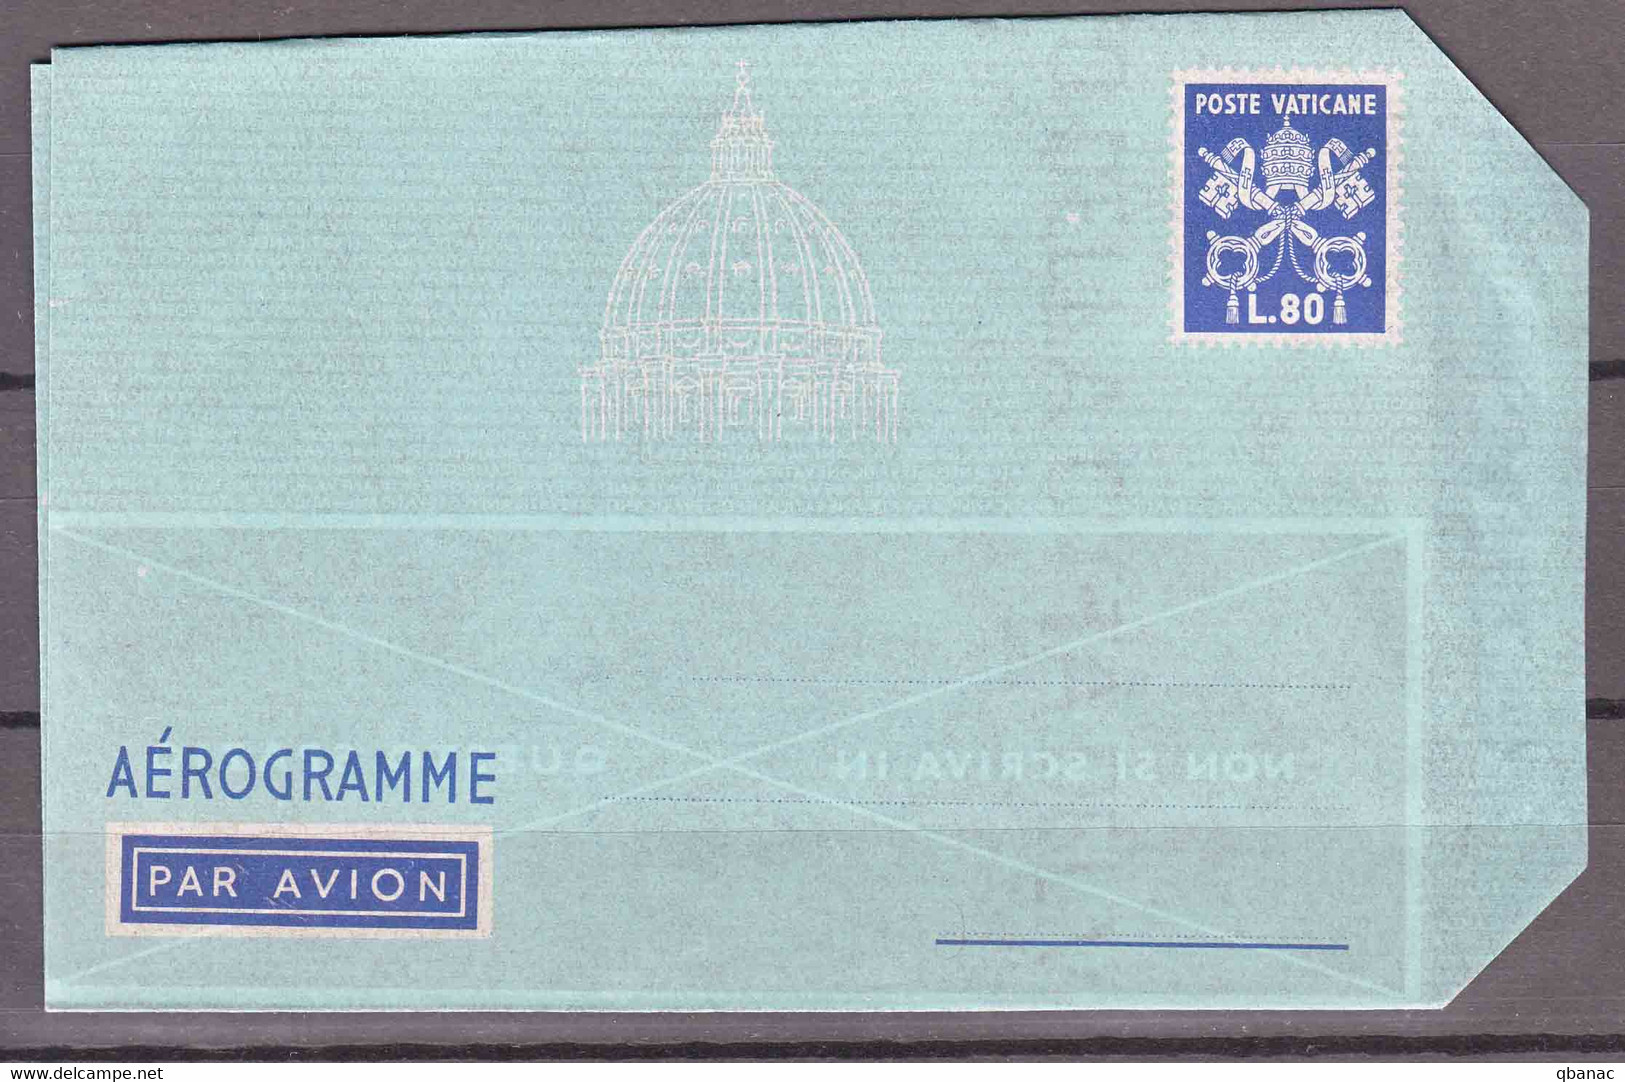 Vatican Aerogramme, Aerogramma 80 Lire Scott#LF6 Watermark Variety, Value 200 Eur - Postal Stationeries